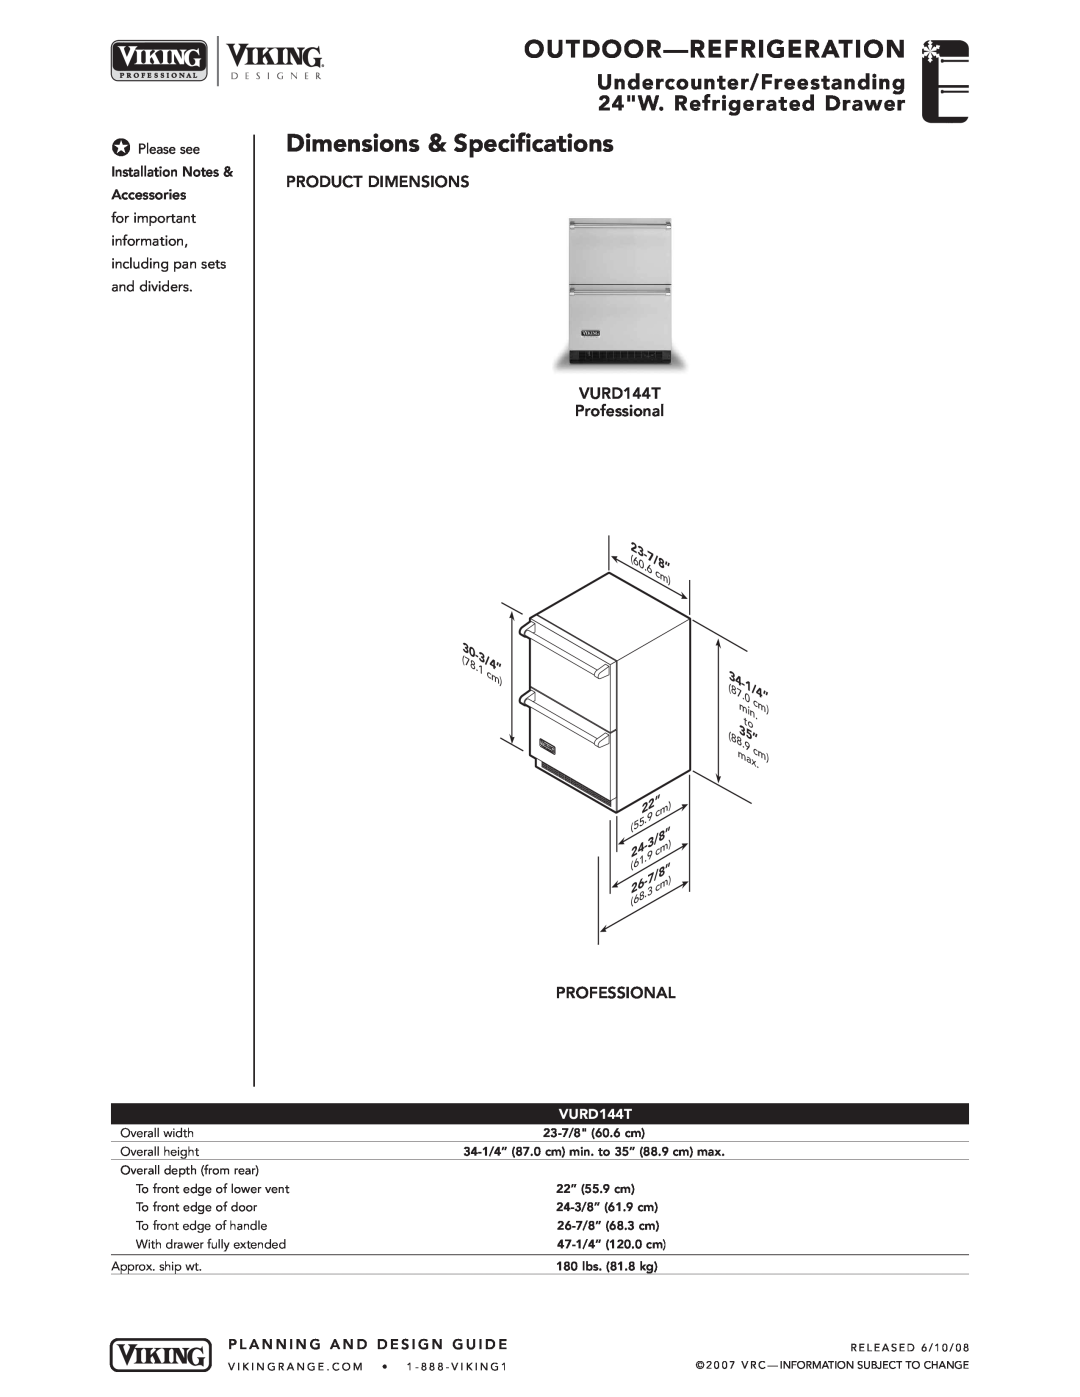 Viking VGBQ3002T1NSS manual Outdoor -Refrigeration, Dimensions & Specifications, VURD144T 